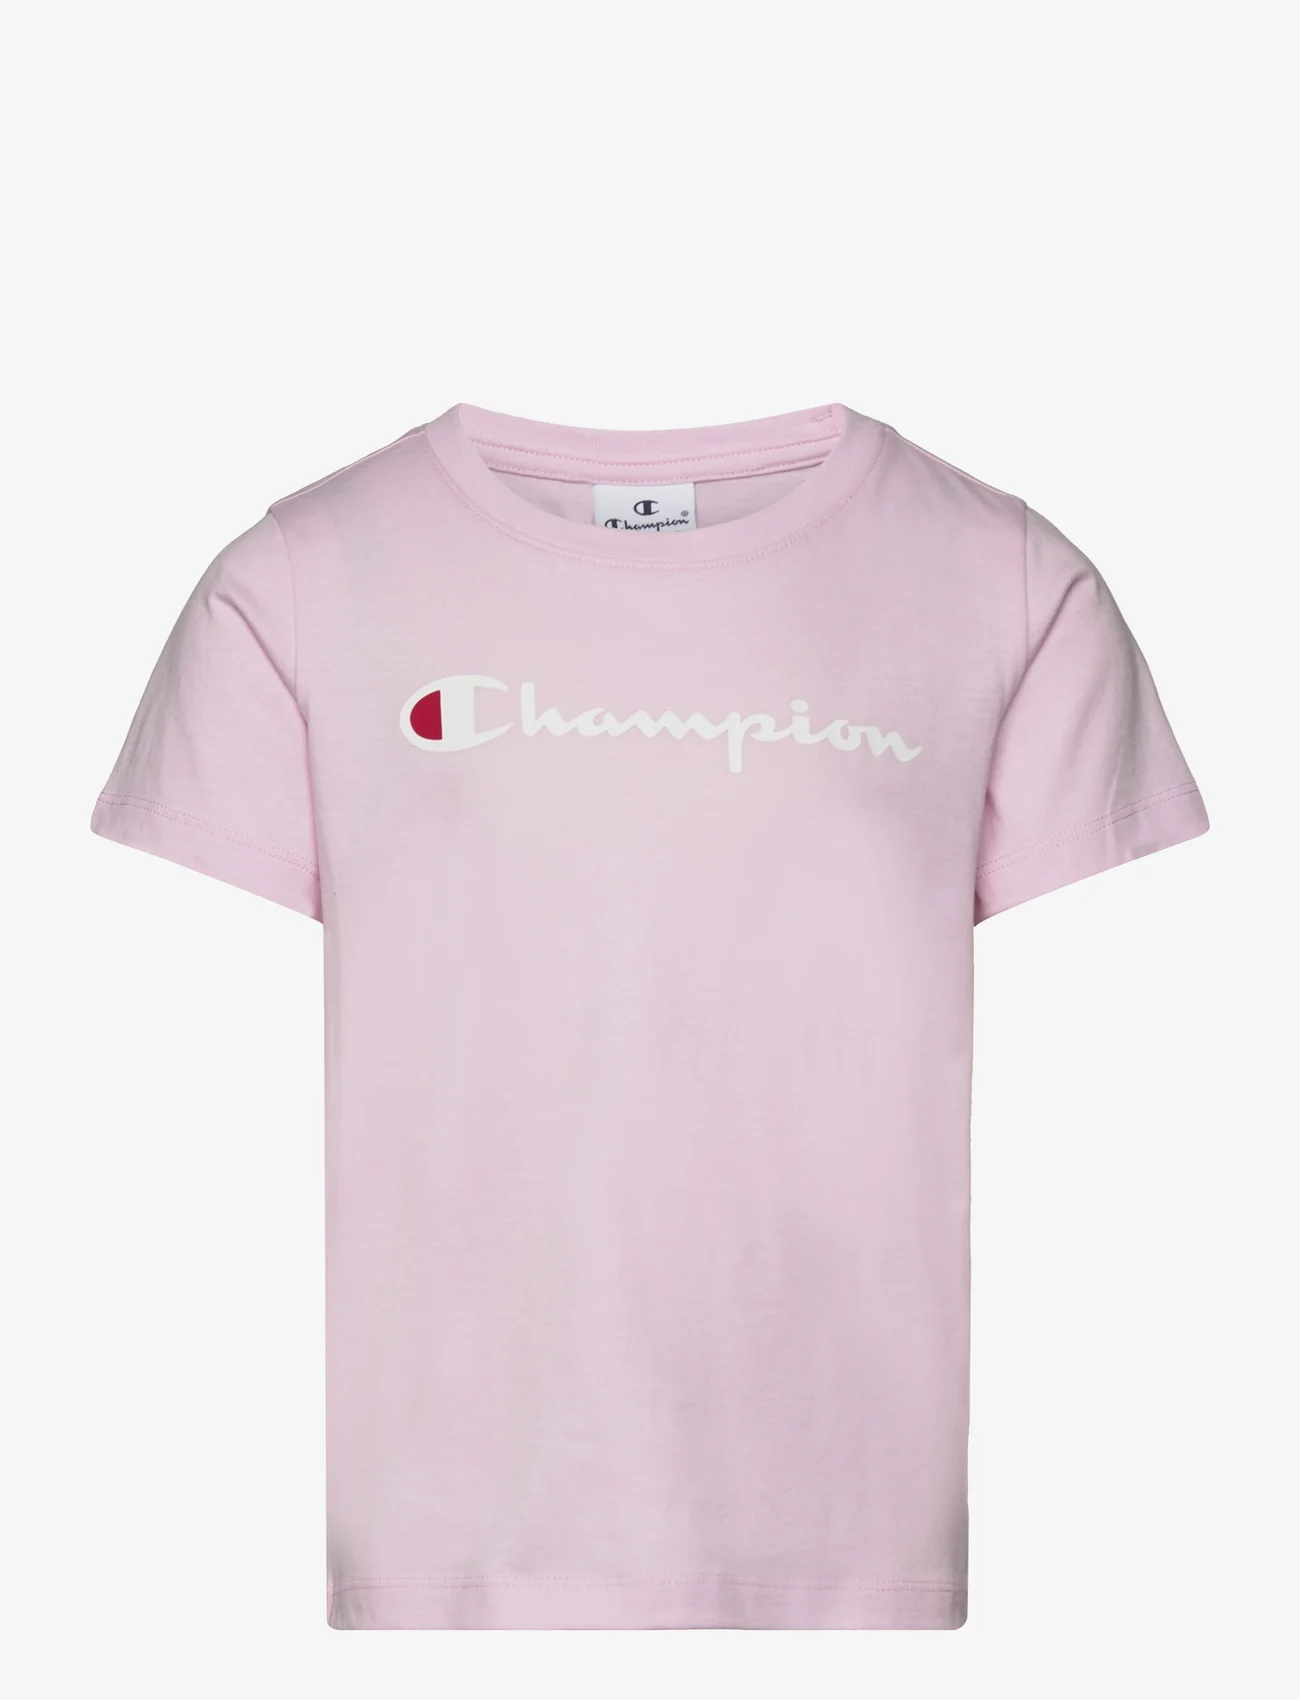 Champion - Crewneck T-Shirt - kortærmede t-shirts - pink lady - 0